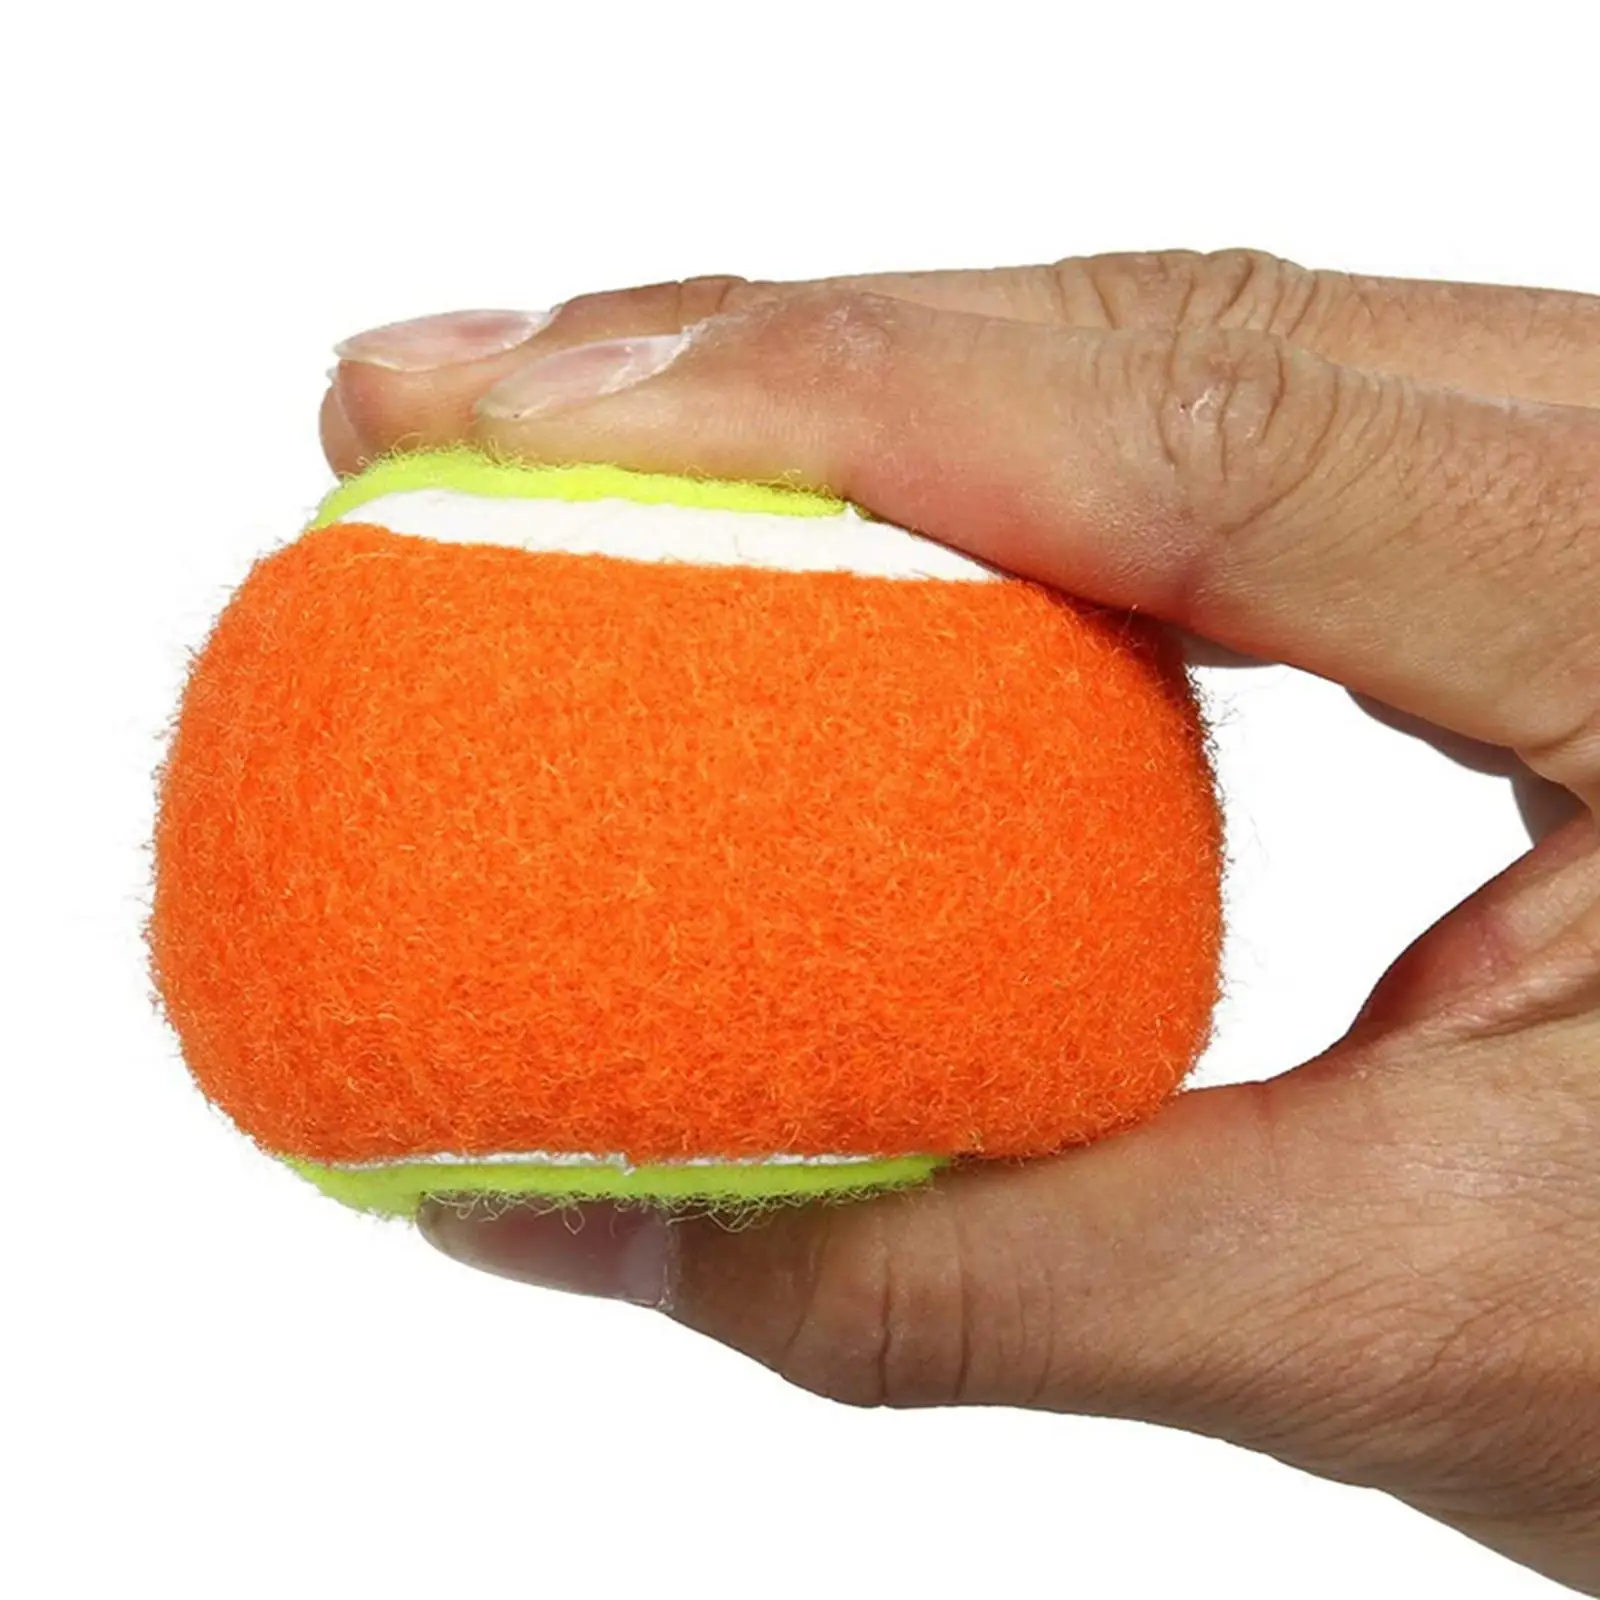 3x Soft Tennis Balls for Kids Easily Track pinwheel Hit Nice Shots for Beginners